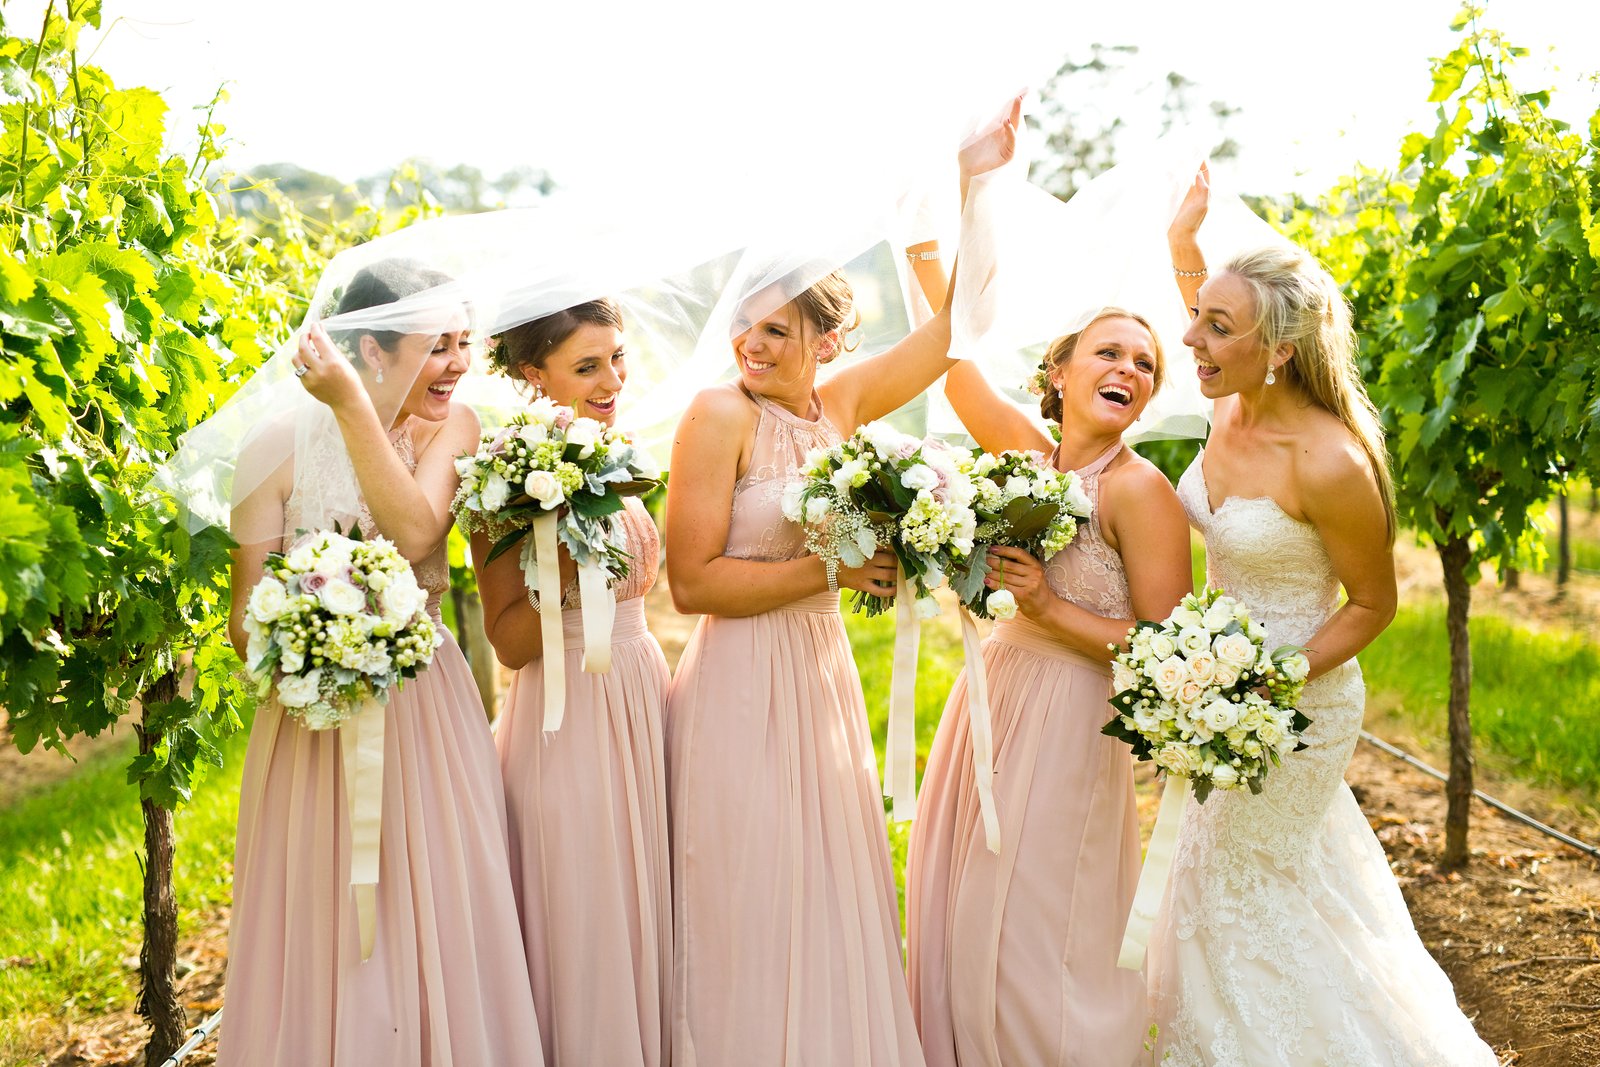 Centennial Vineyards Bowral wedding bridemaids veil fun